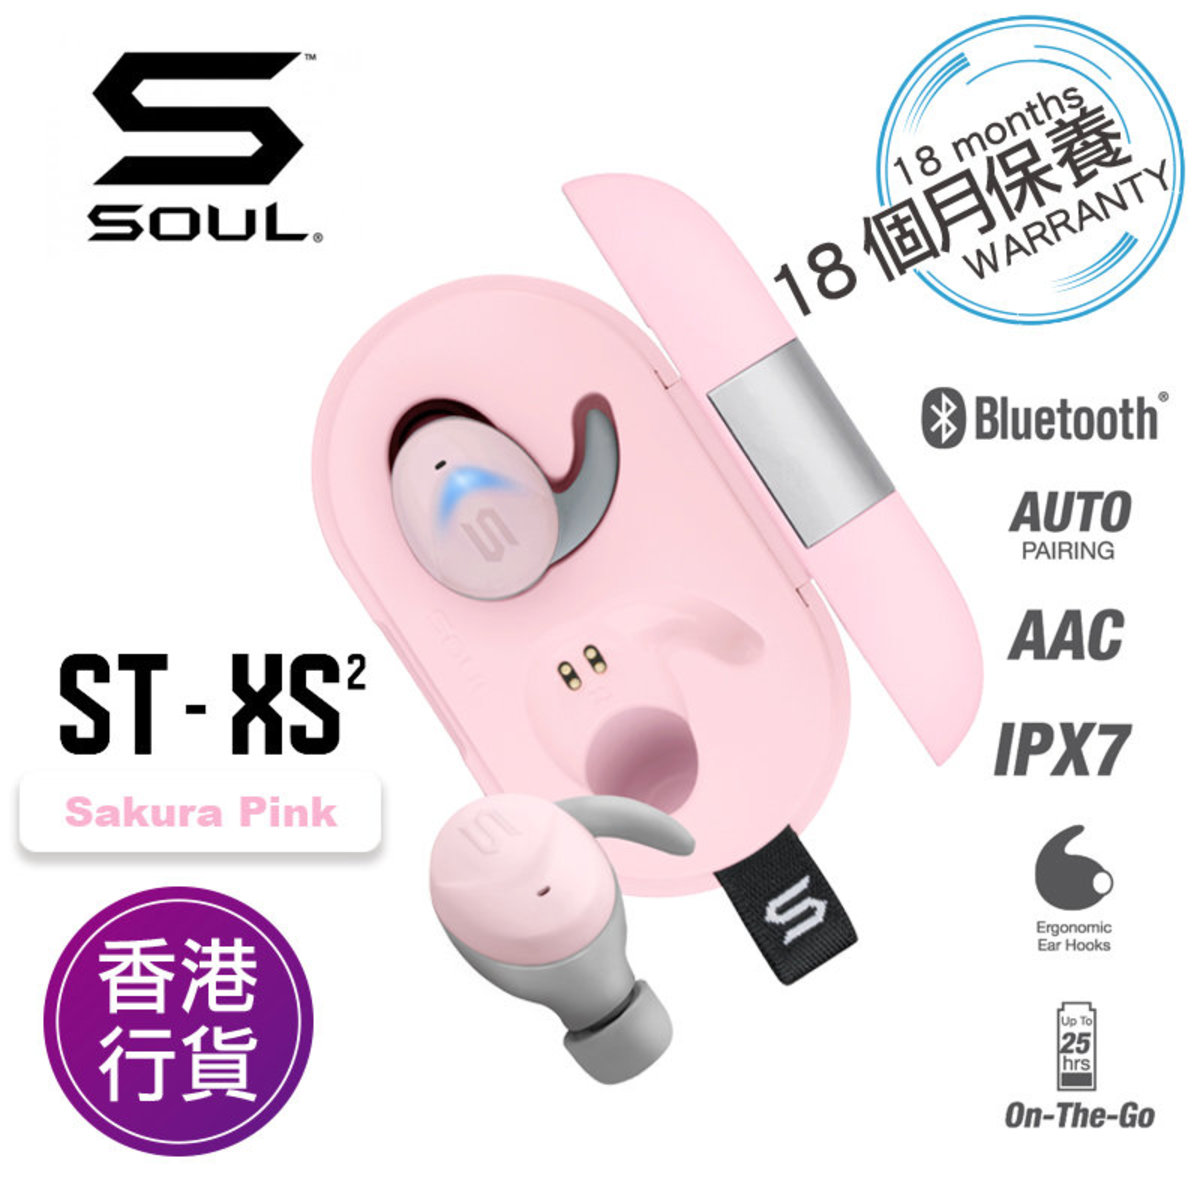 Soul St Xs2 High Performance Earphones With Bluetooth Sakura Pink 18 Months Warranty Hktvmall Online Shopping